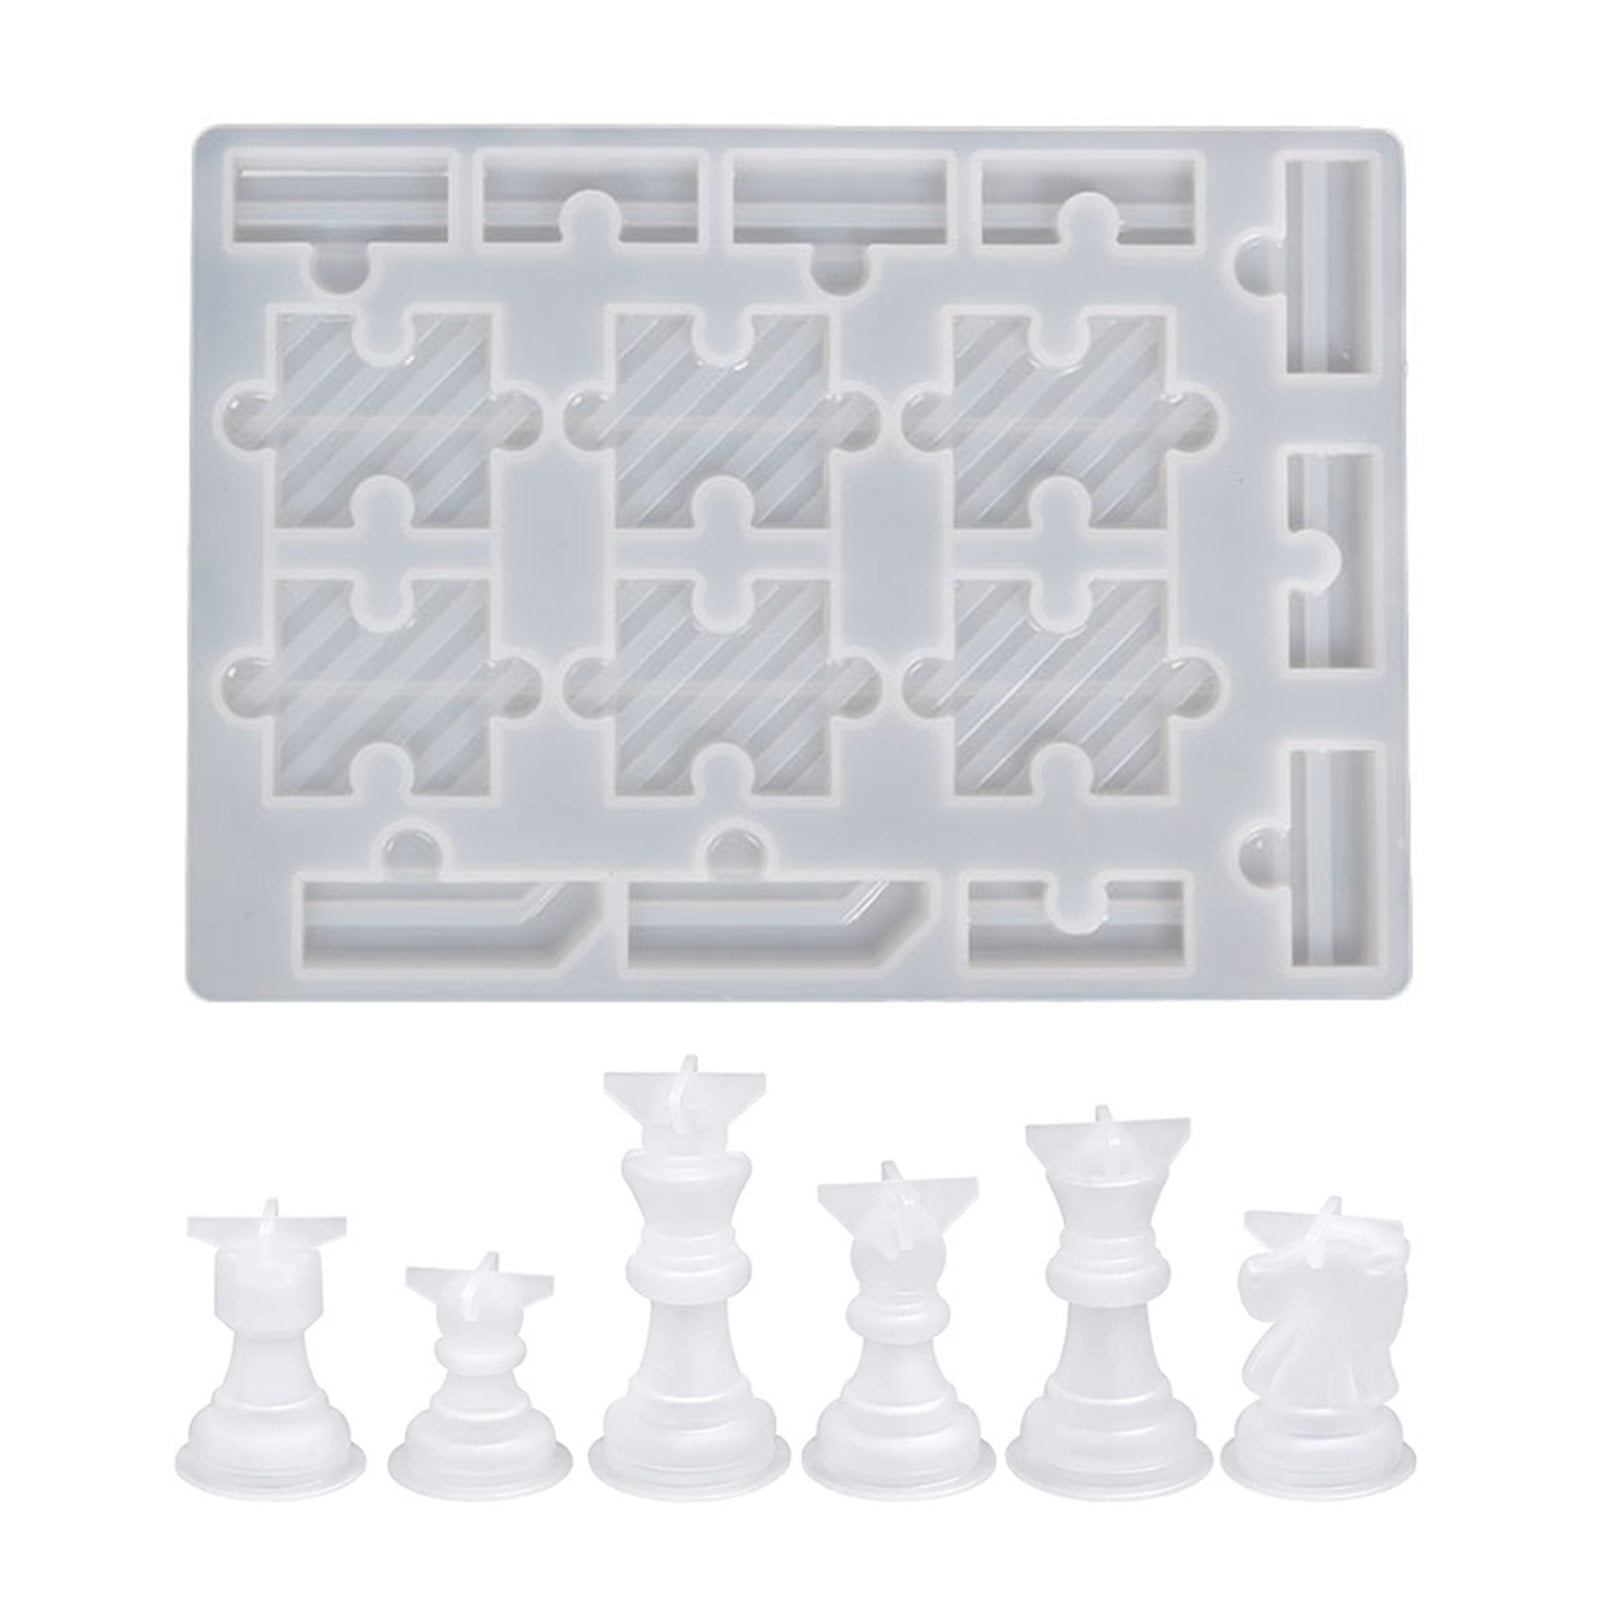 Resin Chess Set Mold